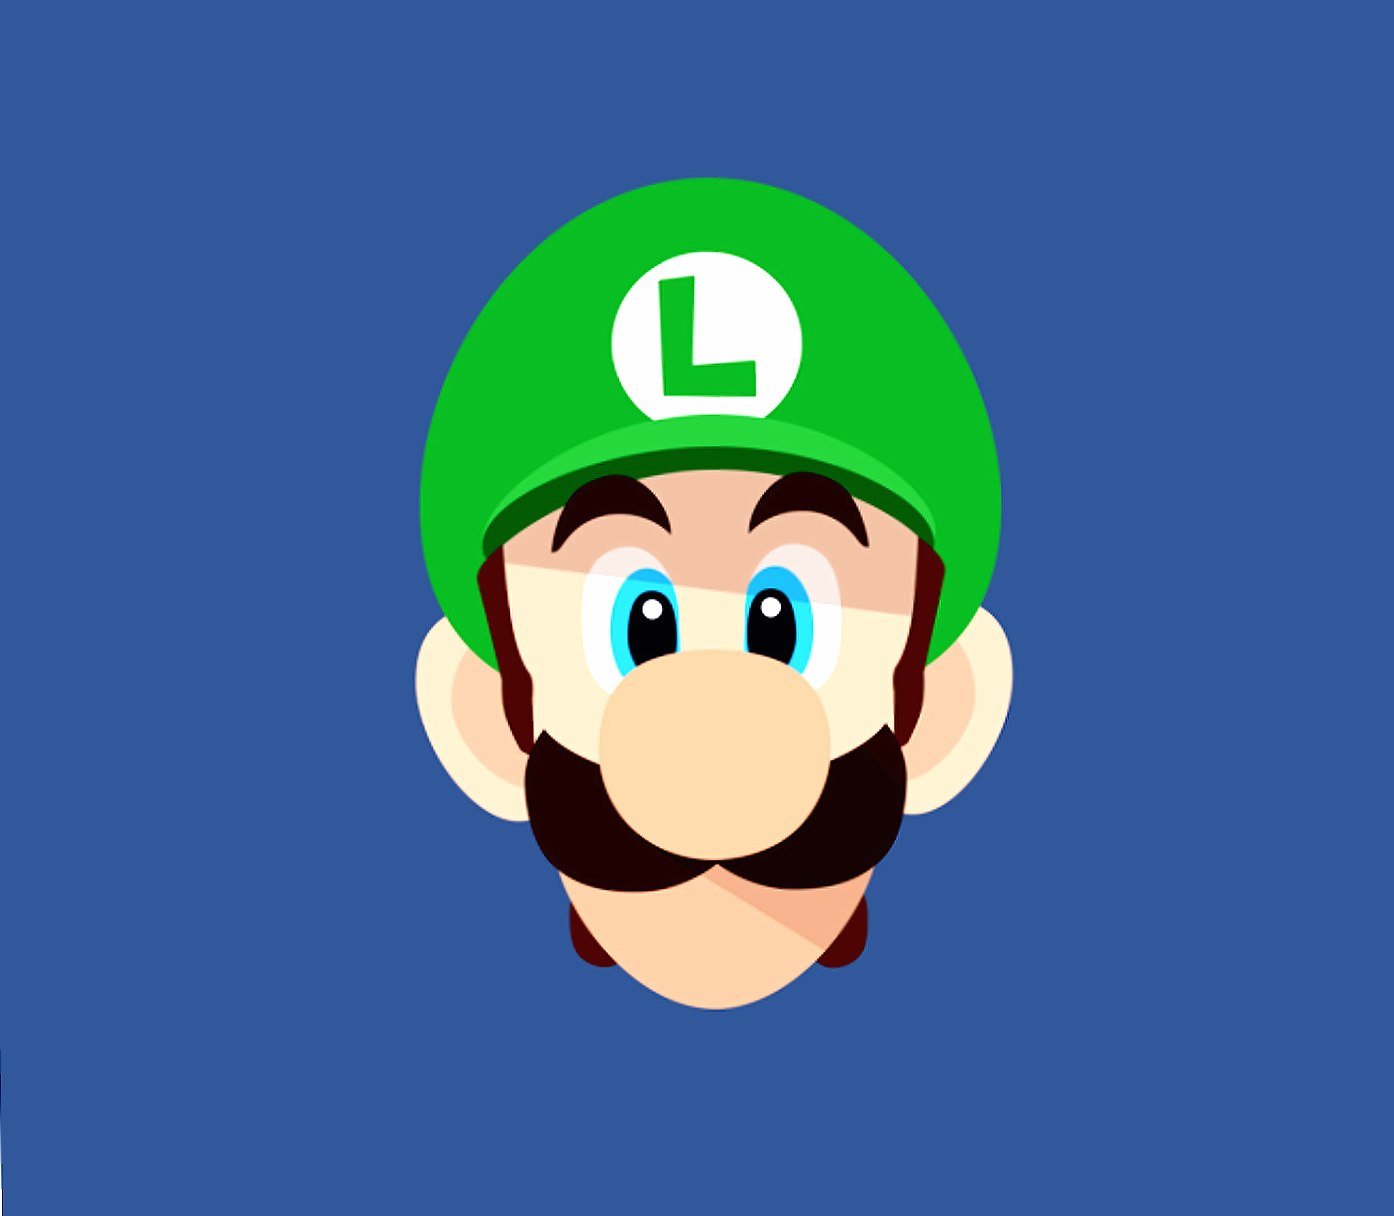 Luigi - Mario at 1024 x 1024 iPad size wallpapers HD quality